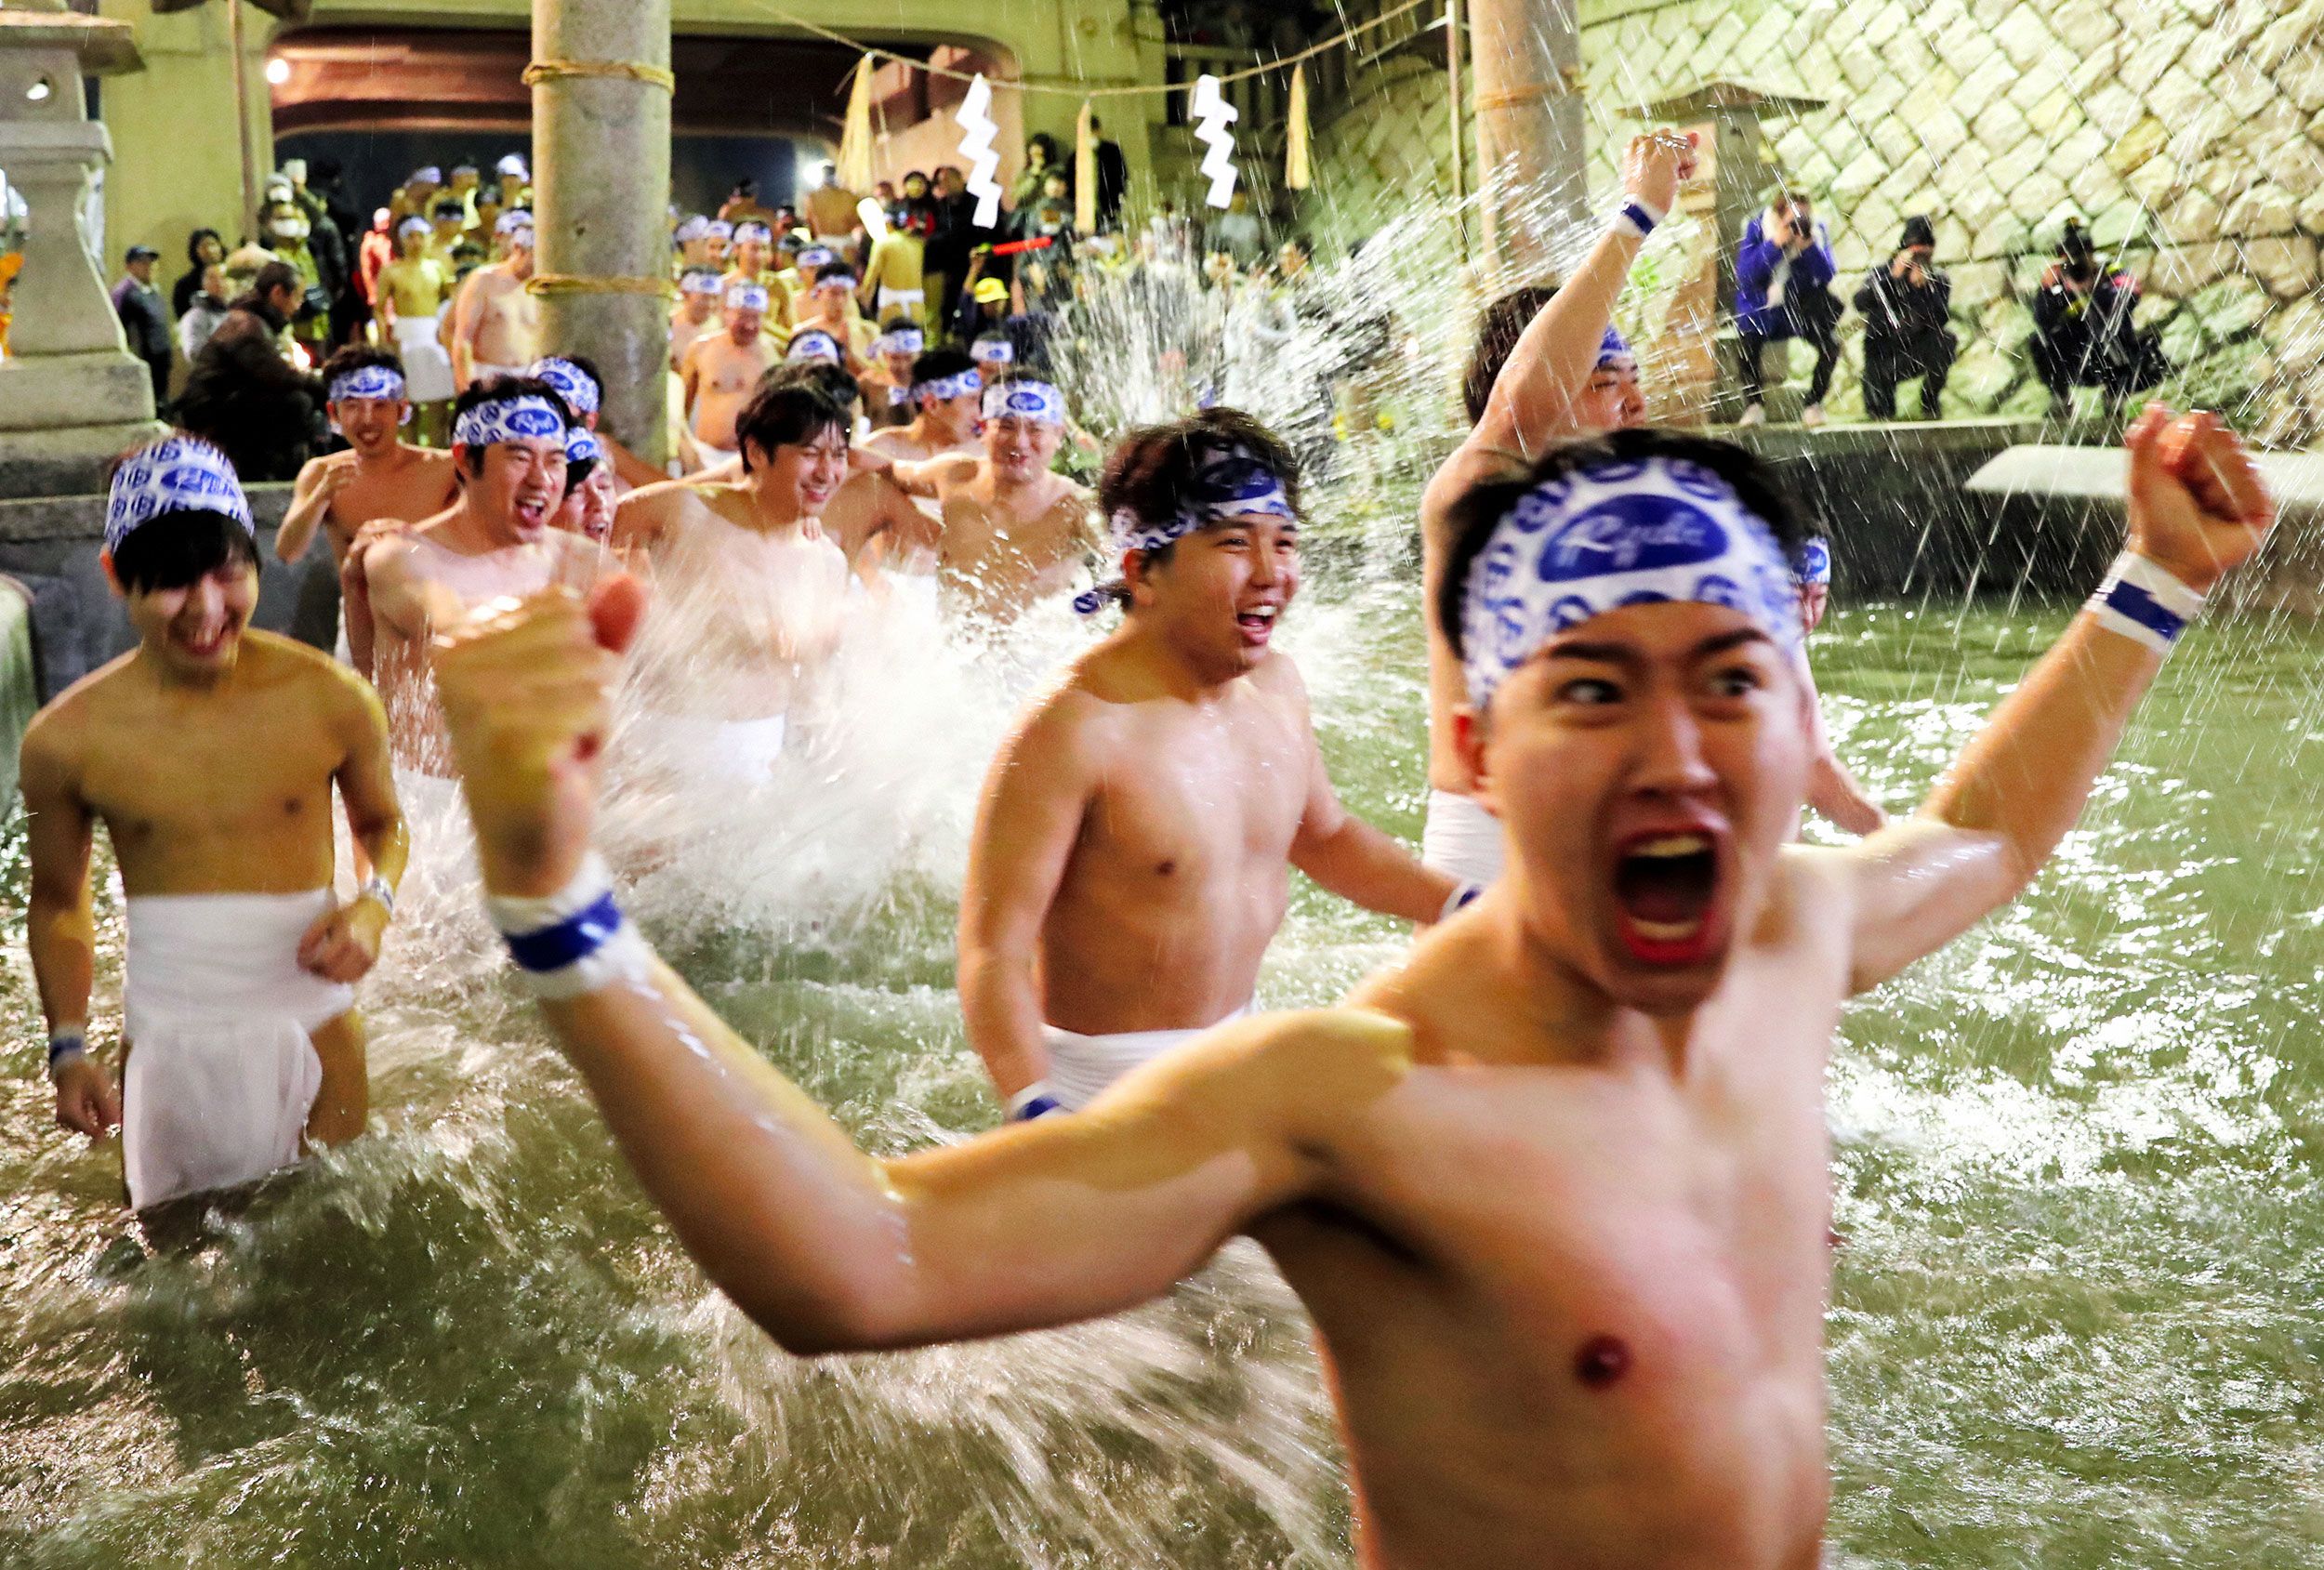 Naked Festival: Thousands gather for Japan's annual 'Hadaka Matsuri' | CNN